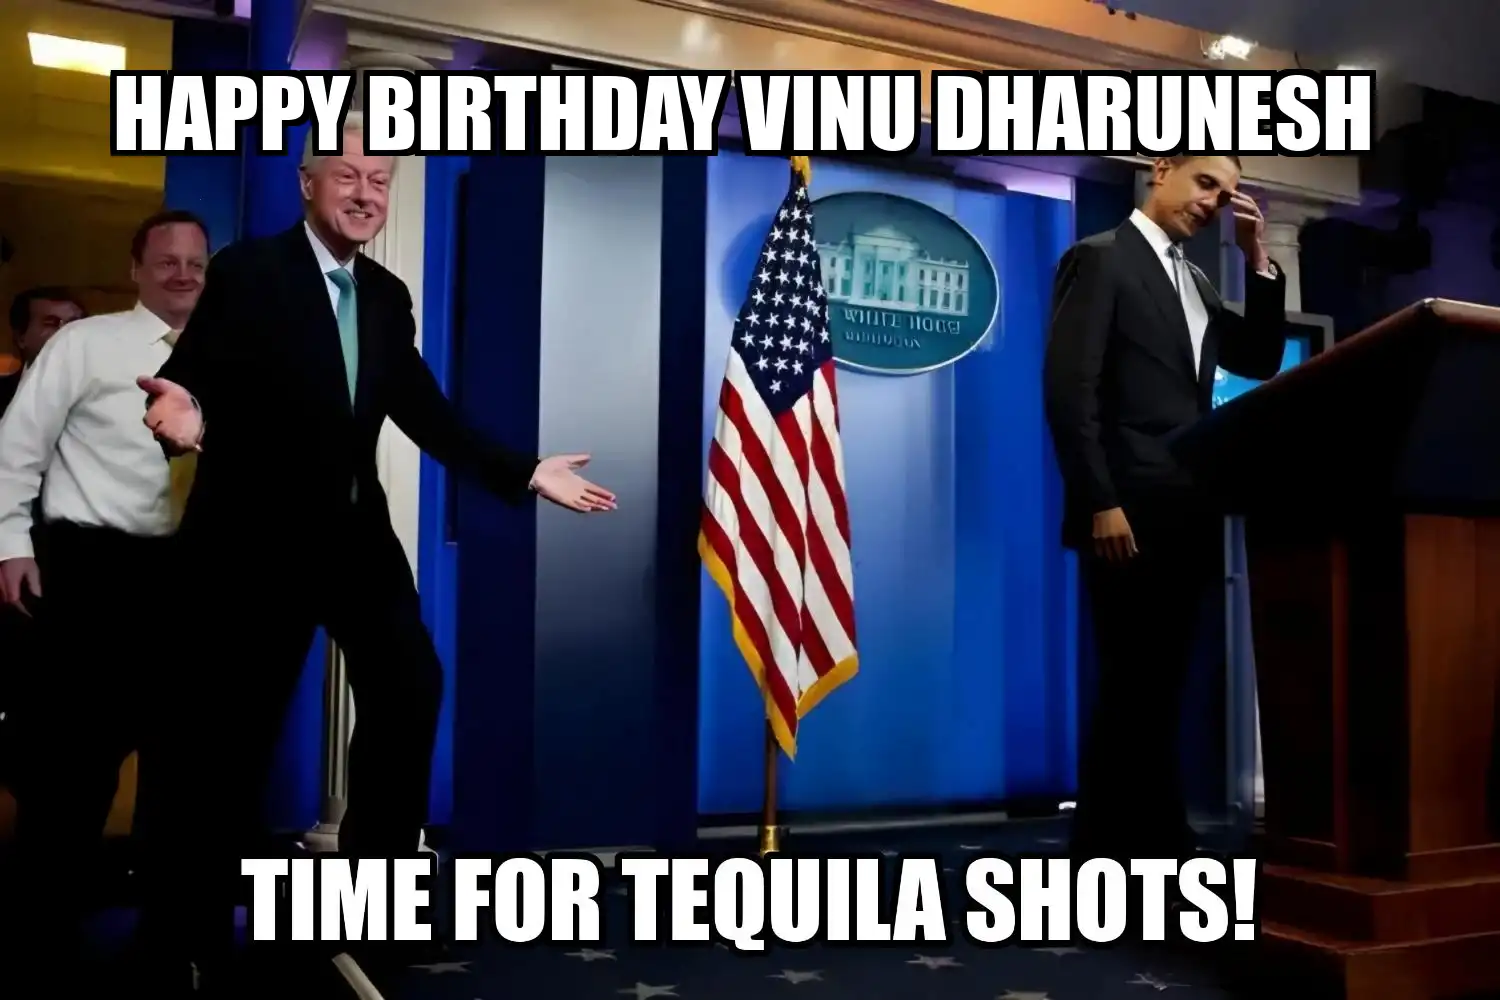 Happy Birthday Vinu dharunesh Time For Tequila Shots Memes